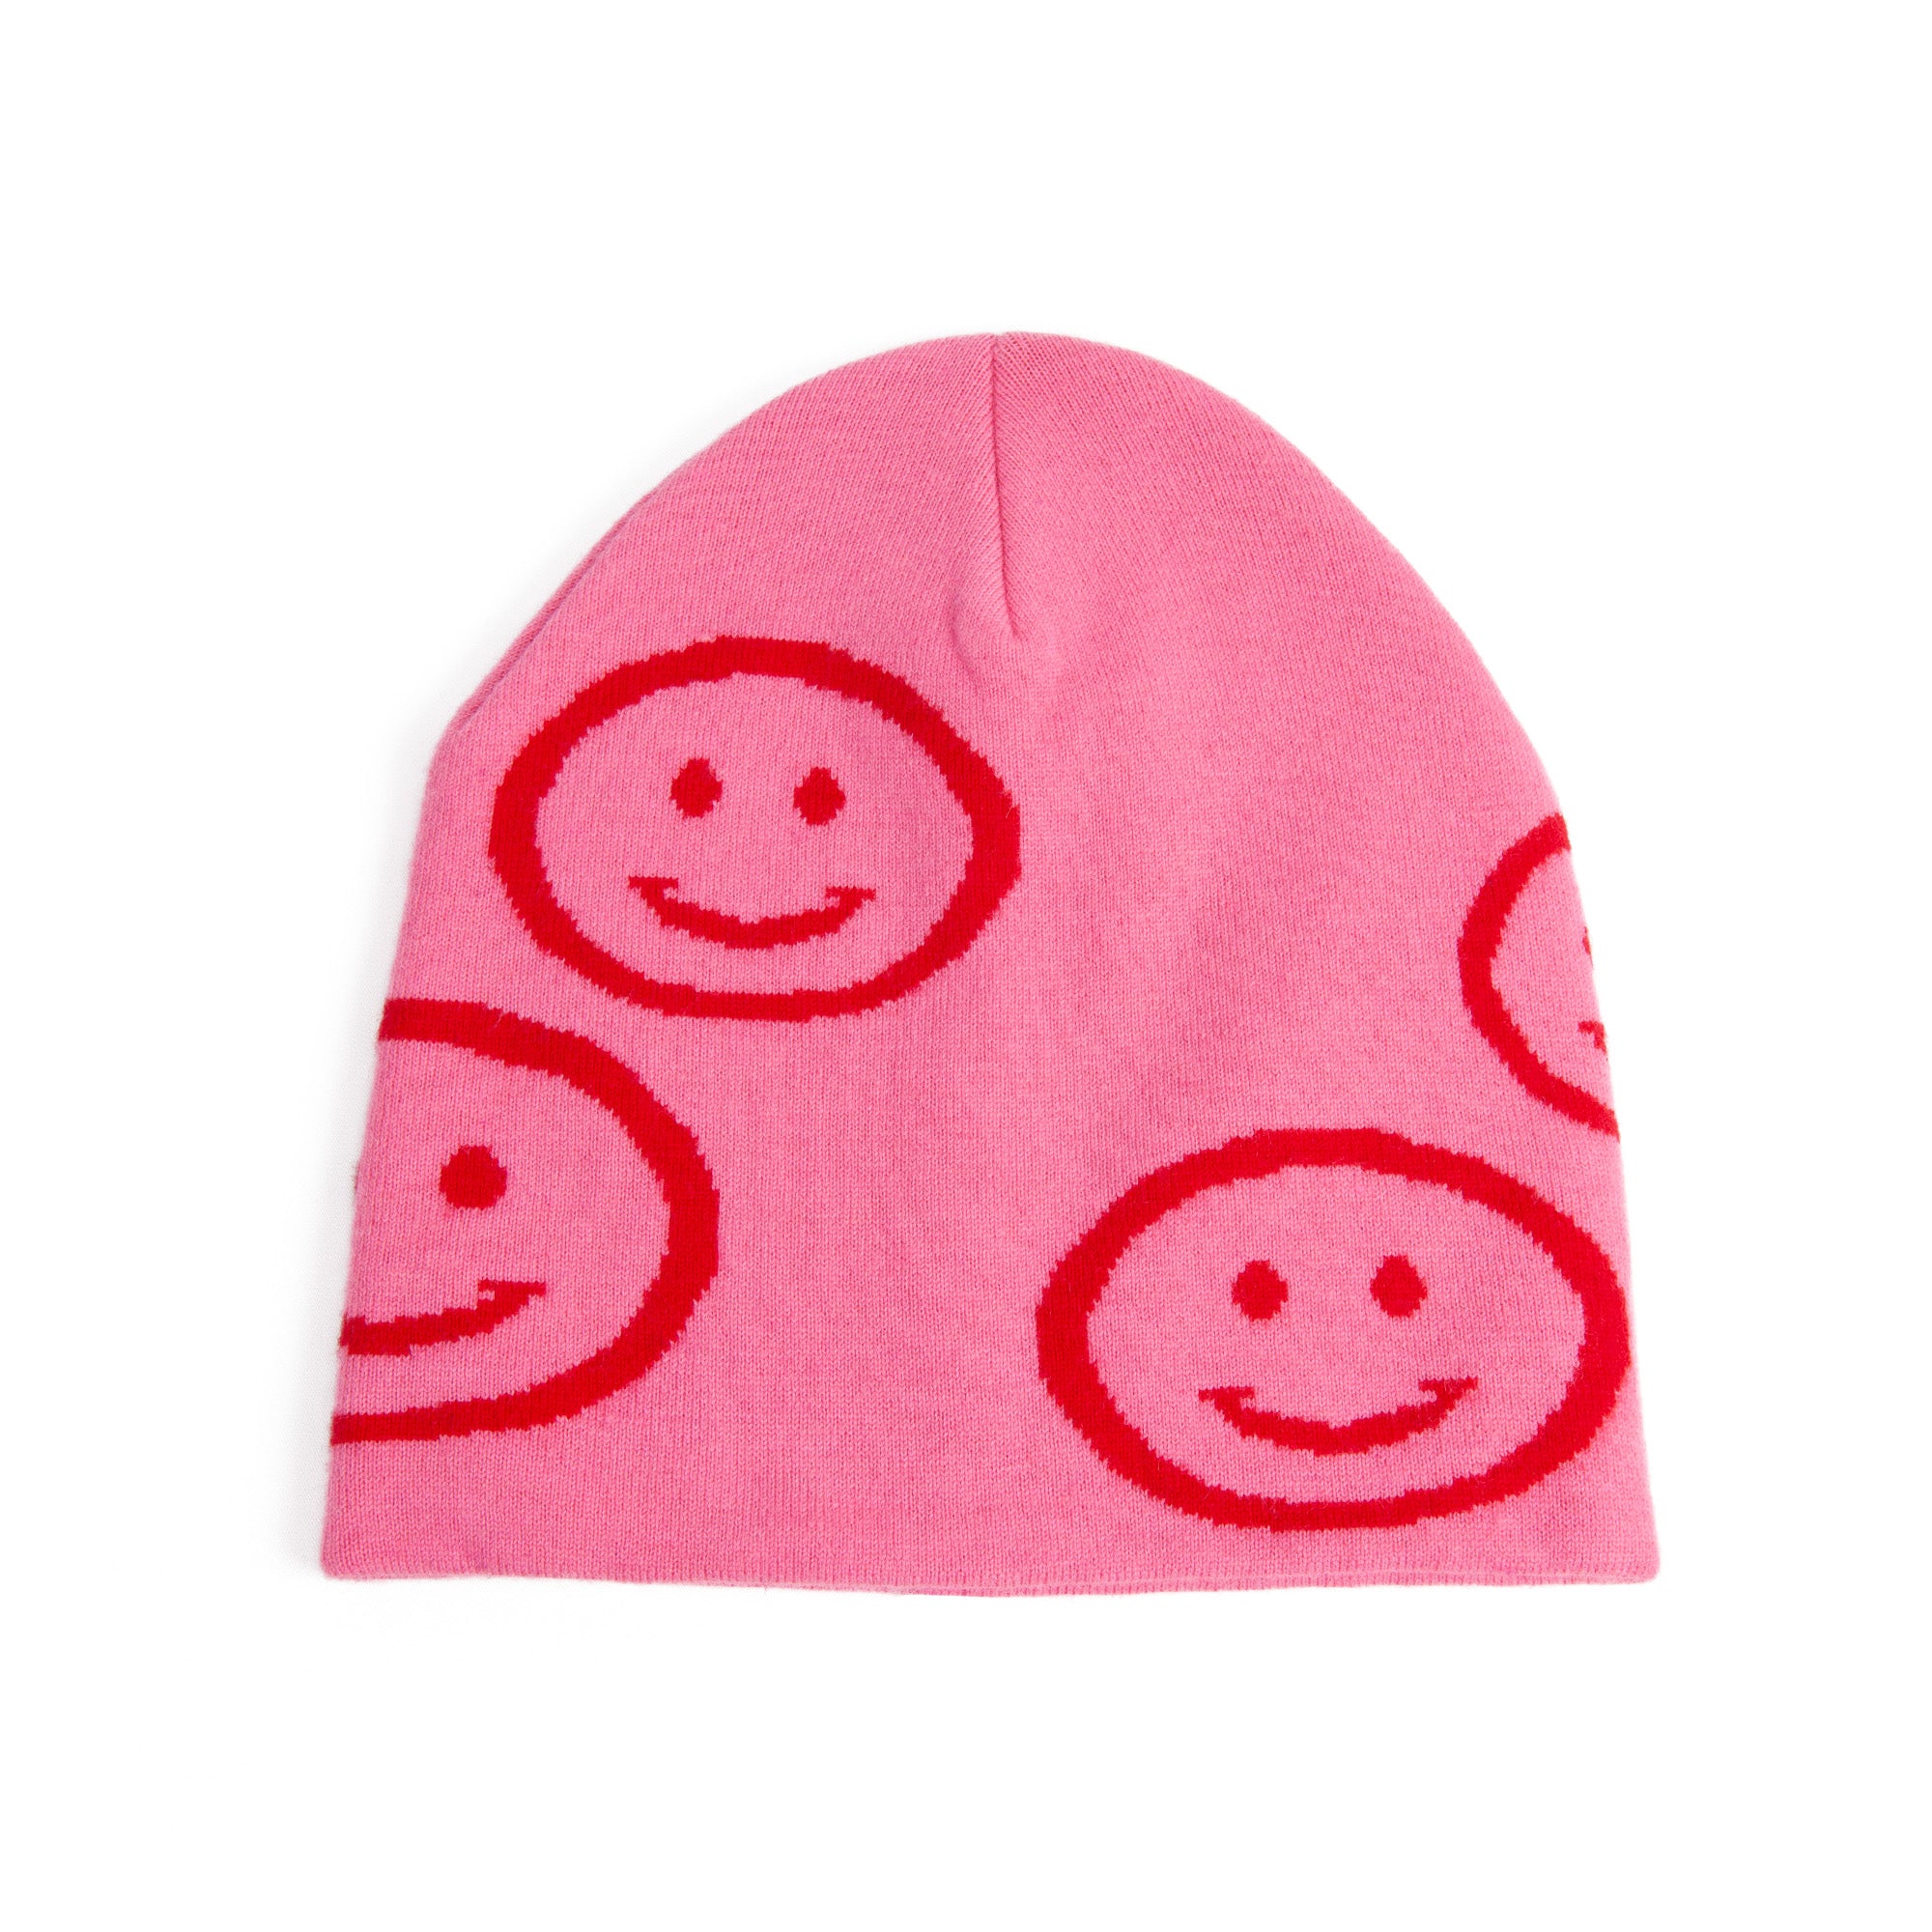 Women’s Hats, Women’s Beanie Hats, Winter Hats,  Comfortable, Happy Lady, Winter, Cold Weather